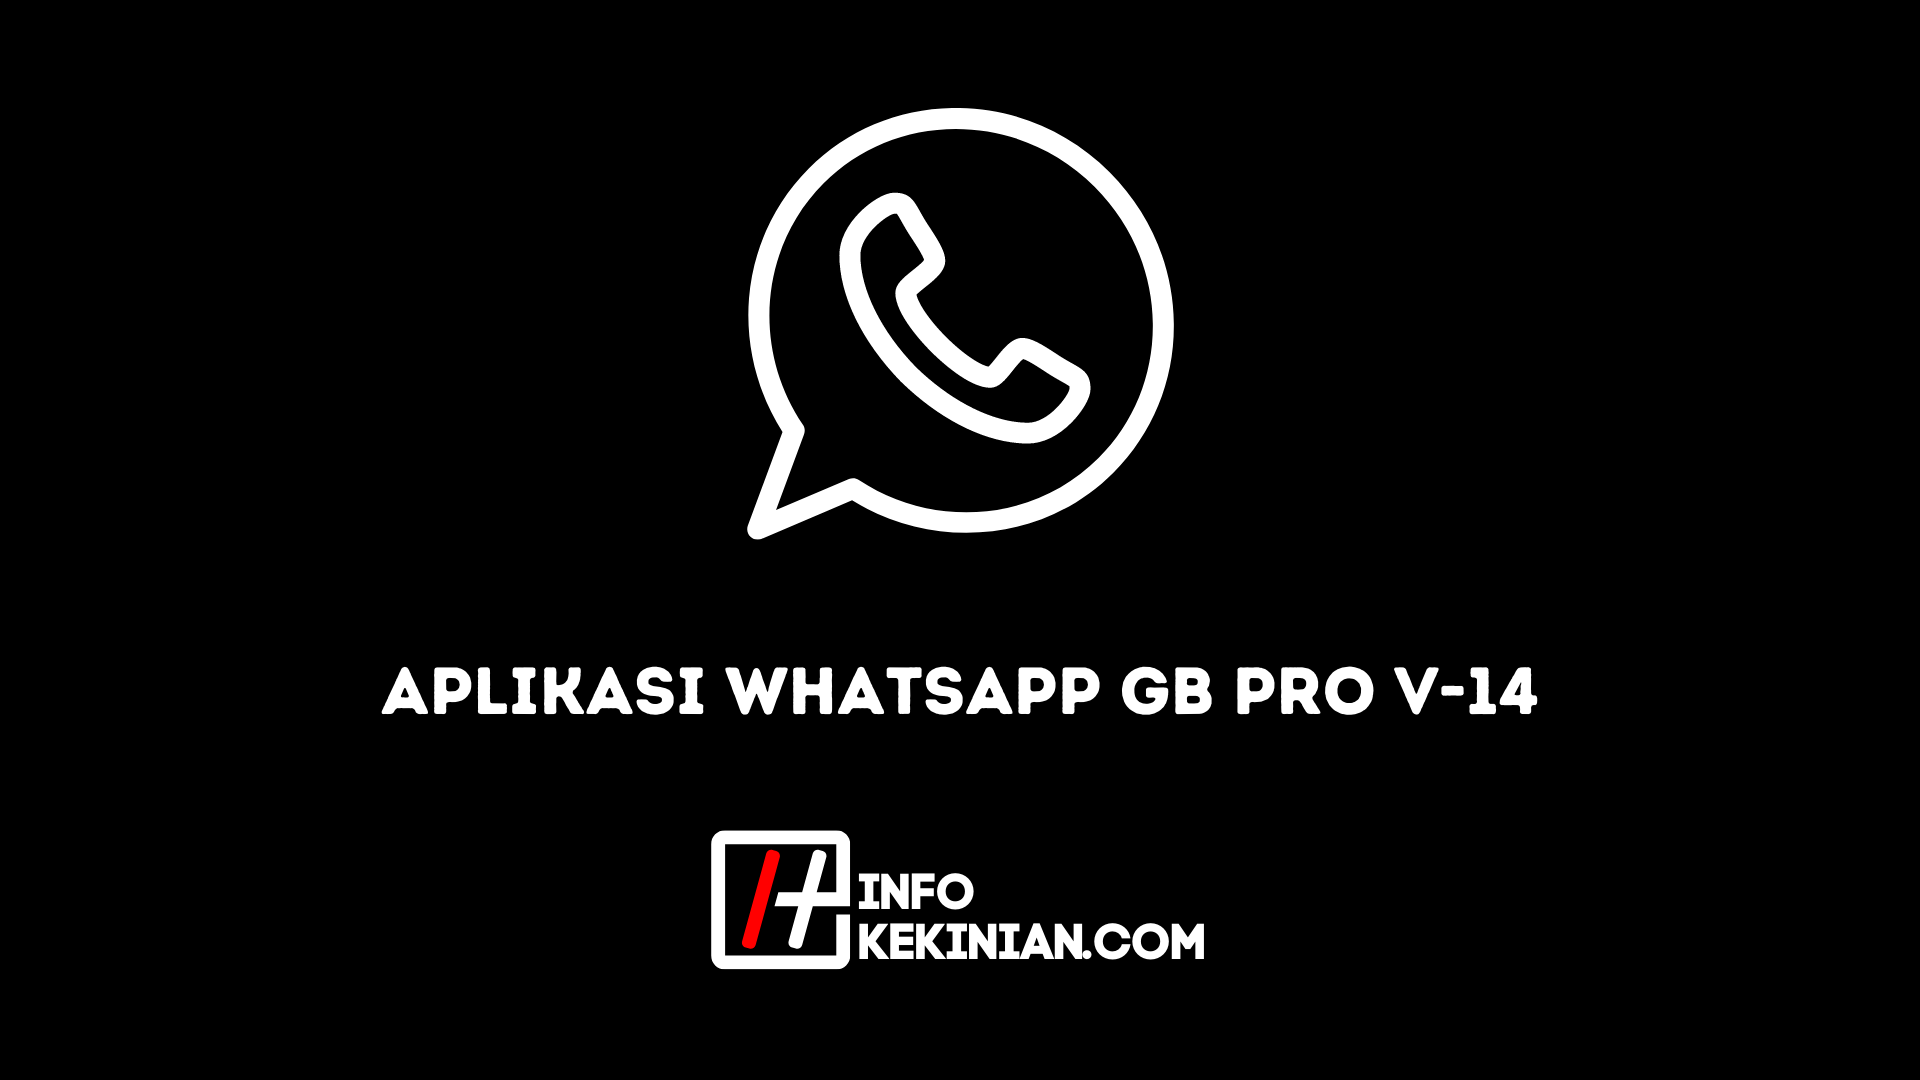 Die WhatsApp Gb Pro V 14-Anwendung, mal sehen